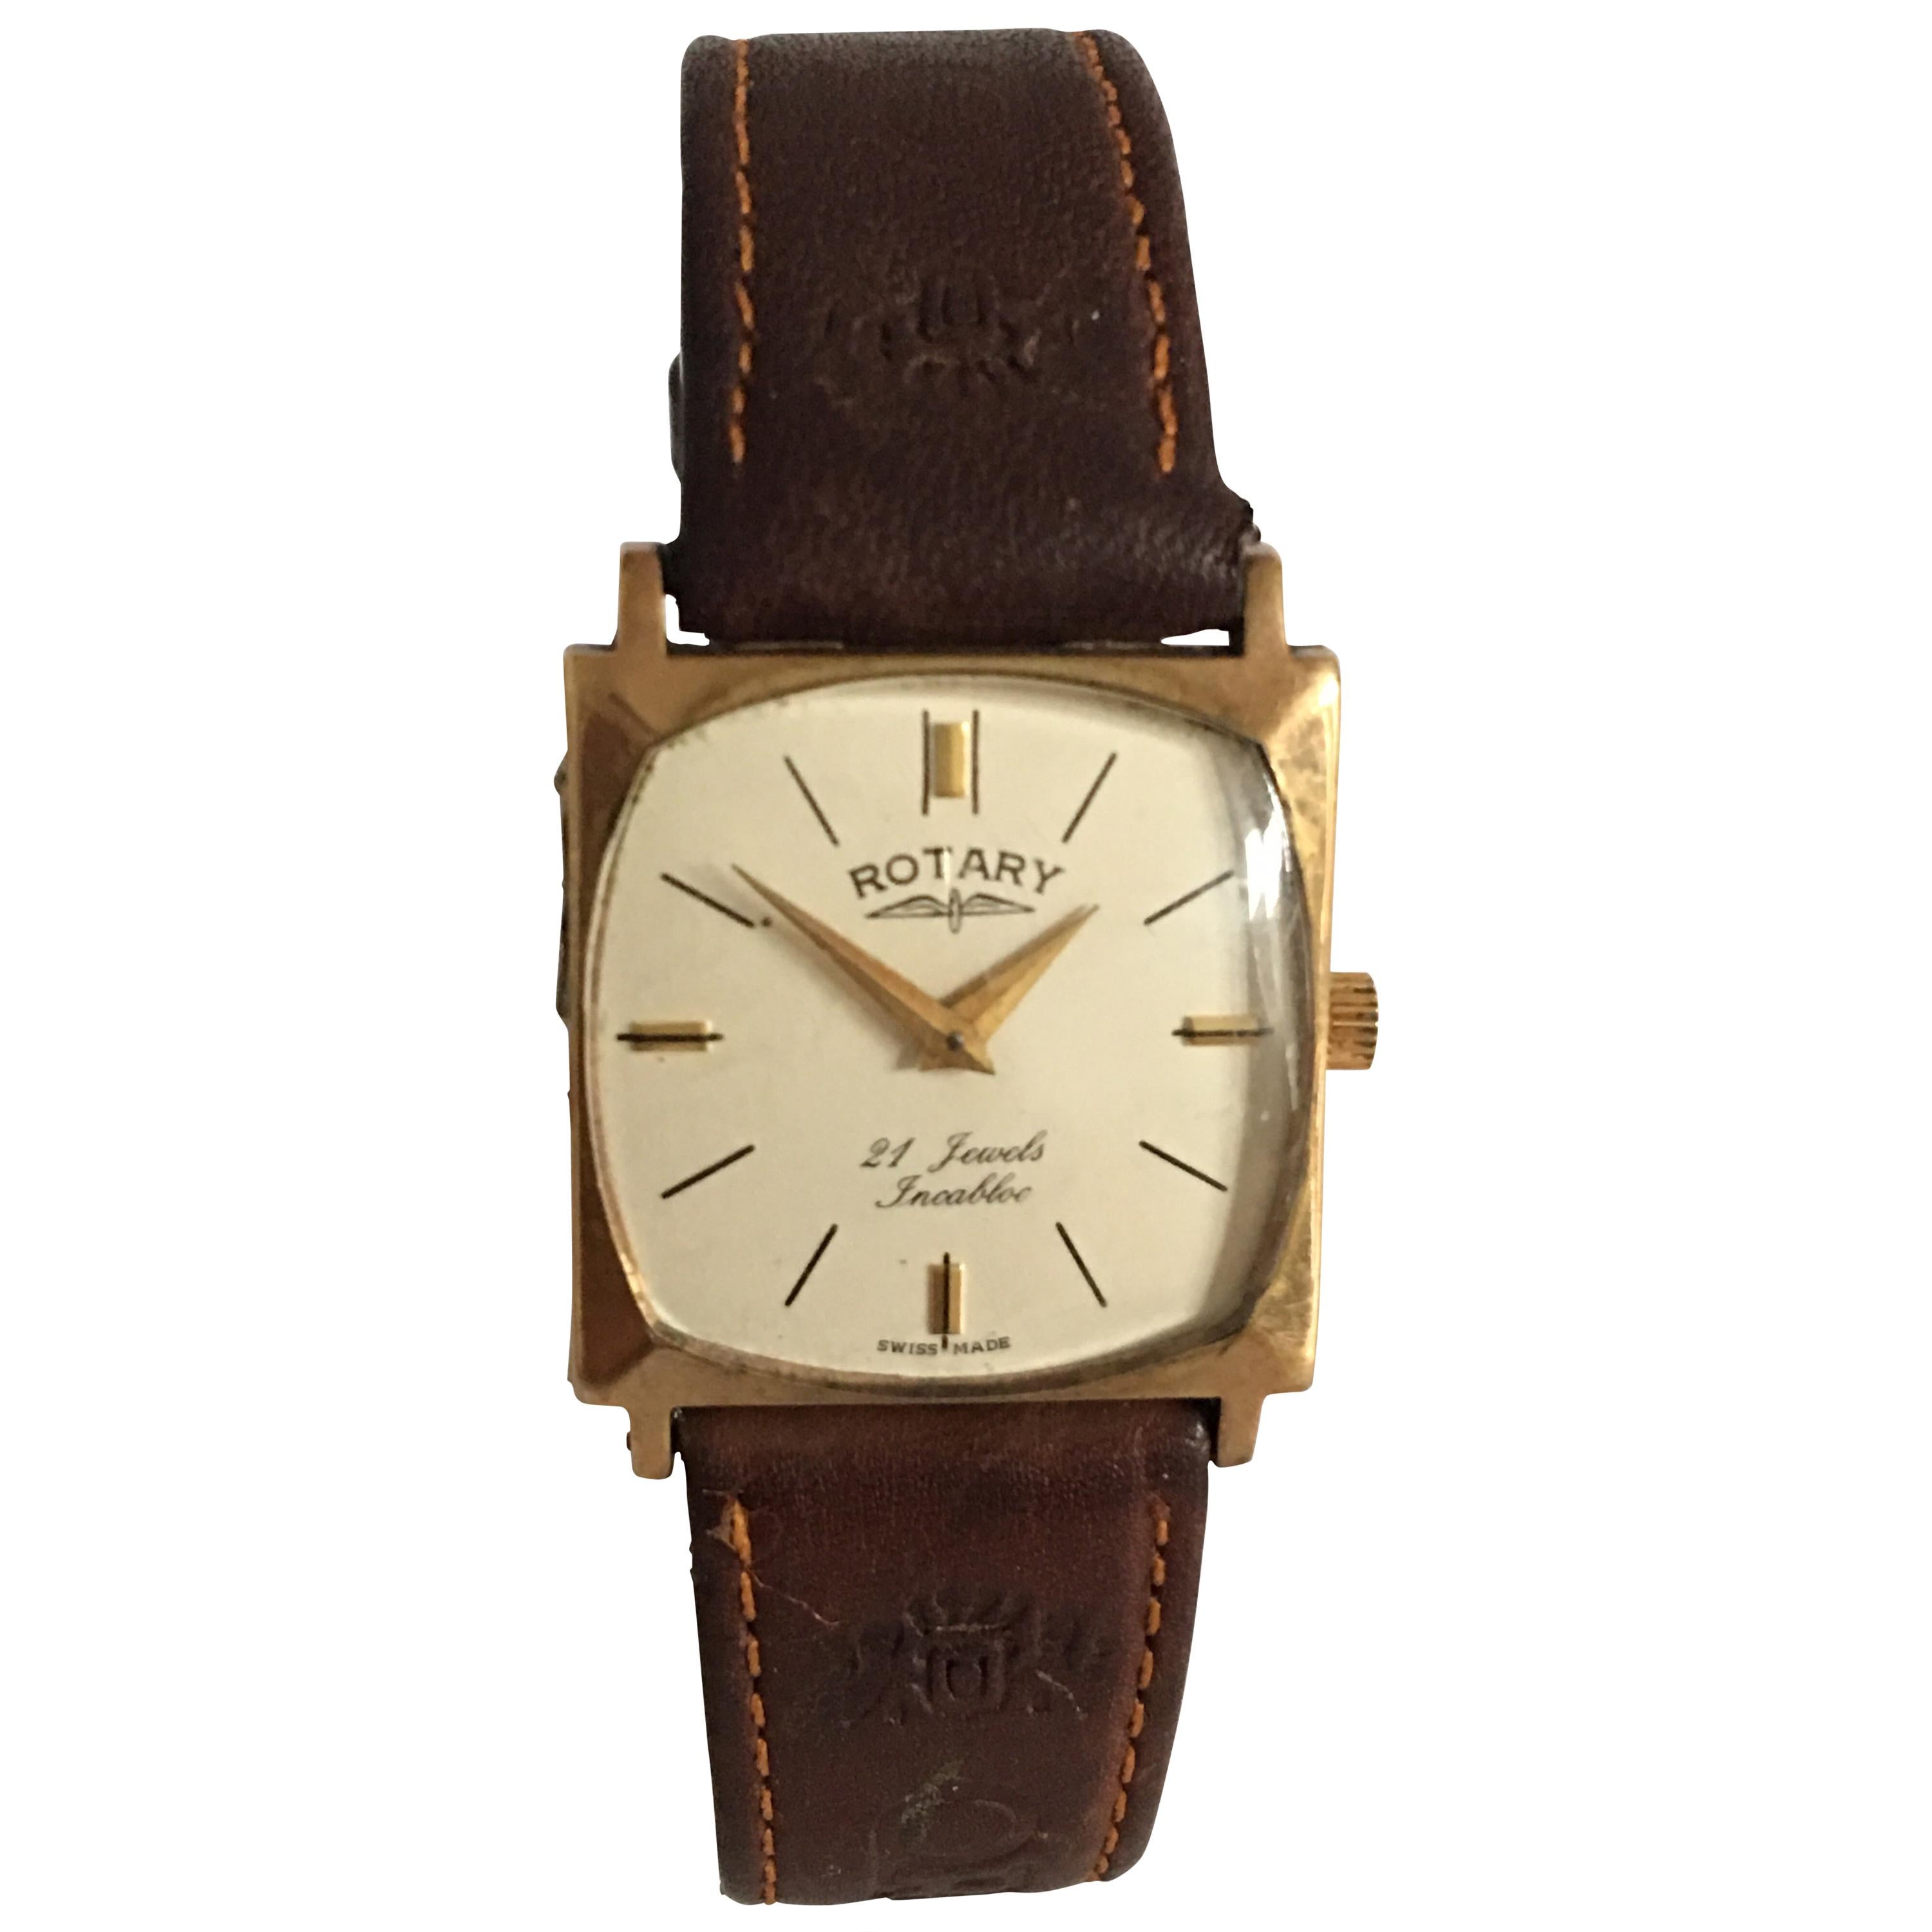 9 Karat Gold Vintage 1970s Rotary Watch